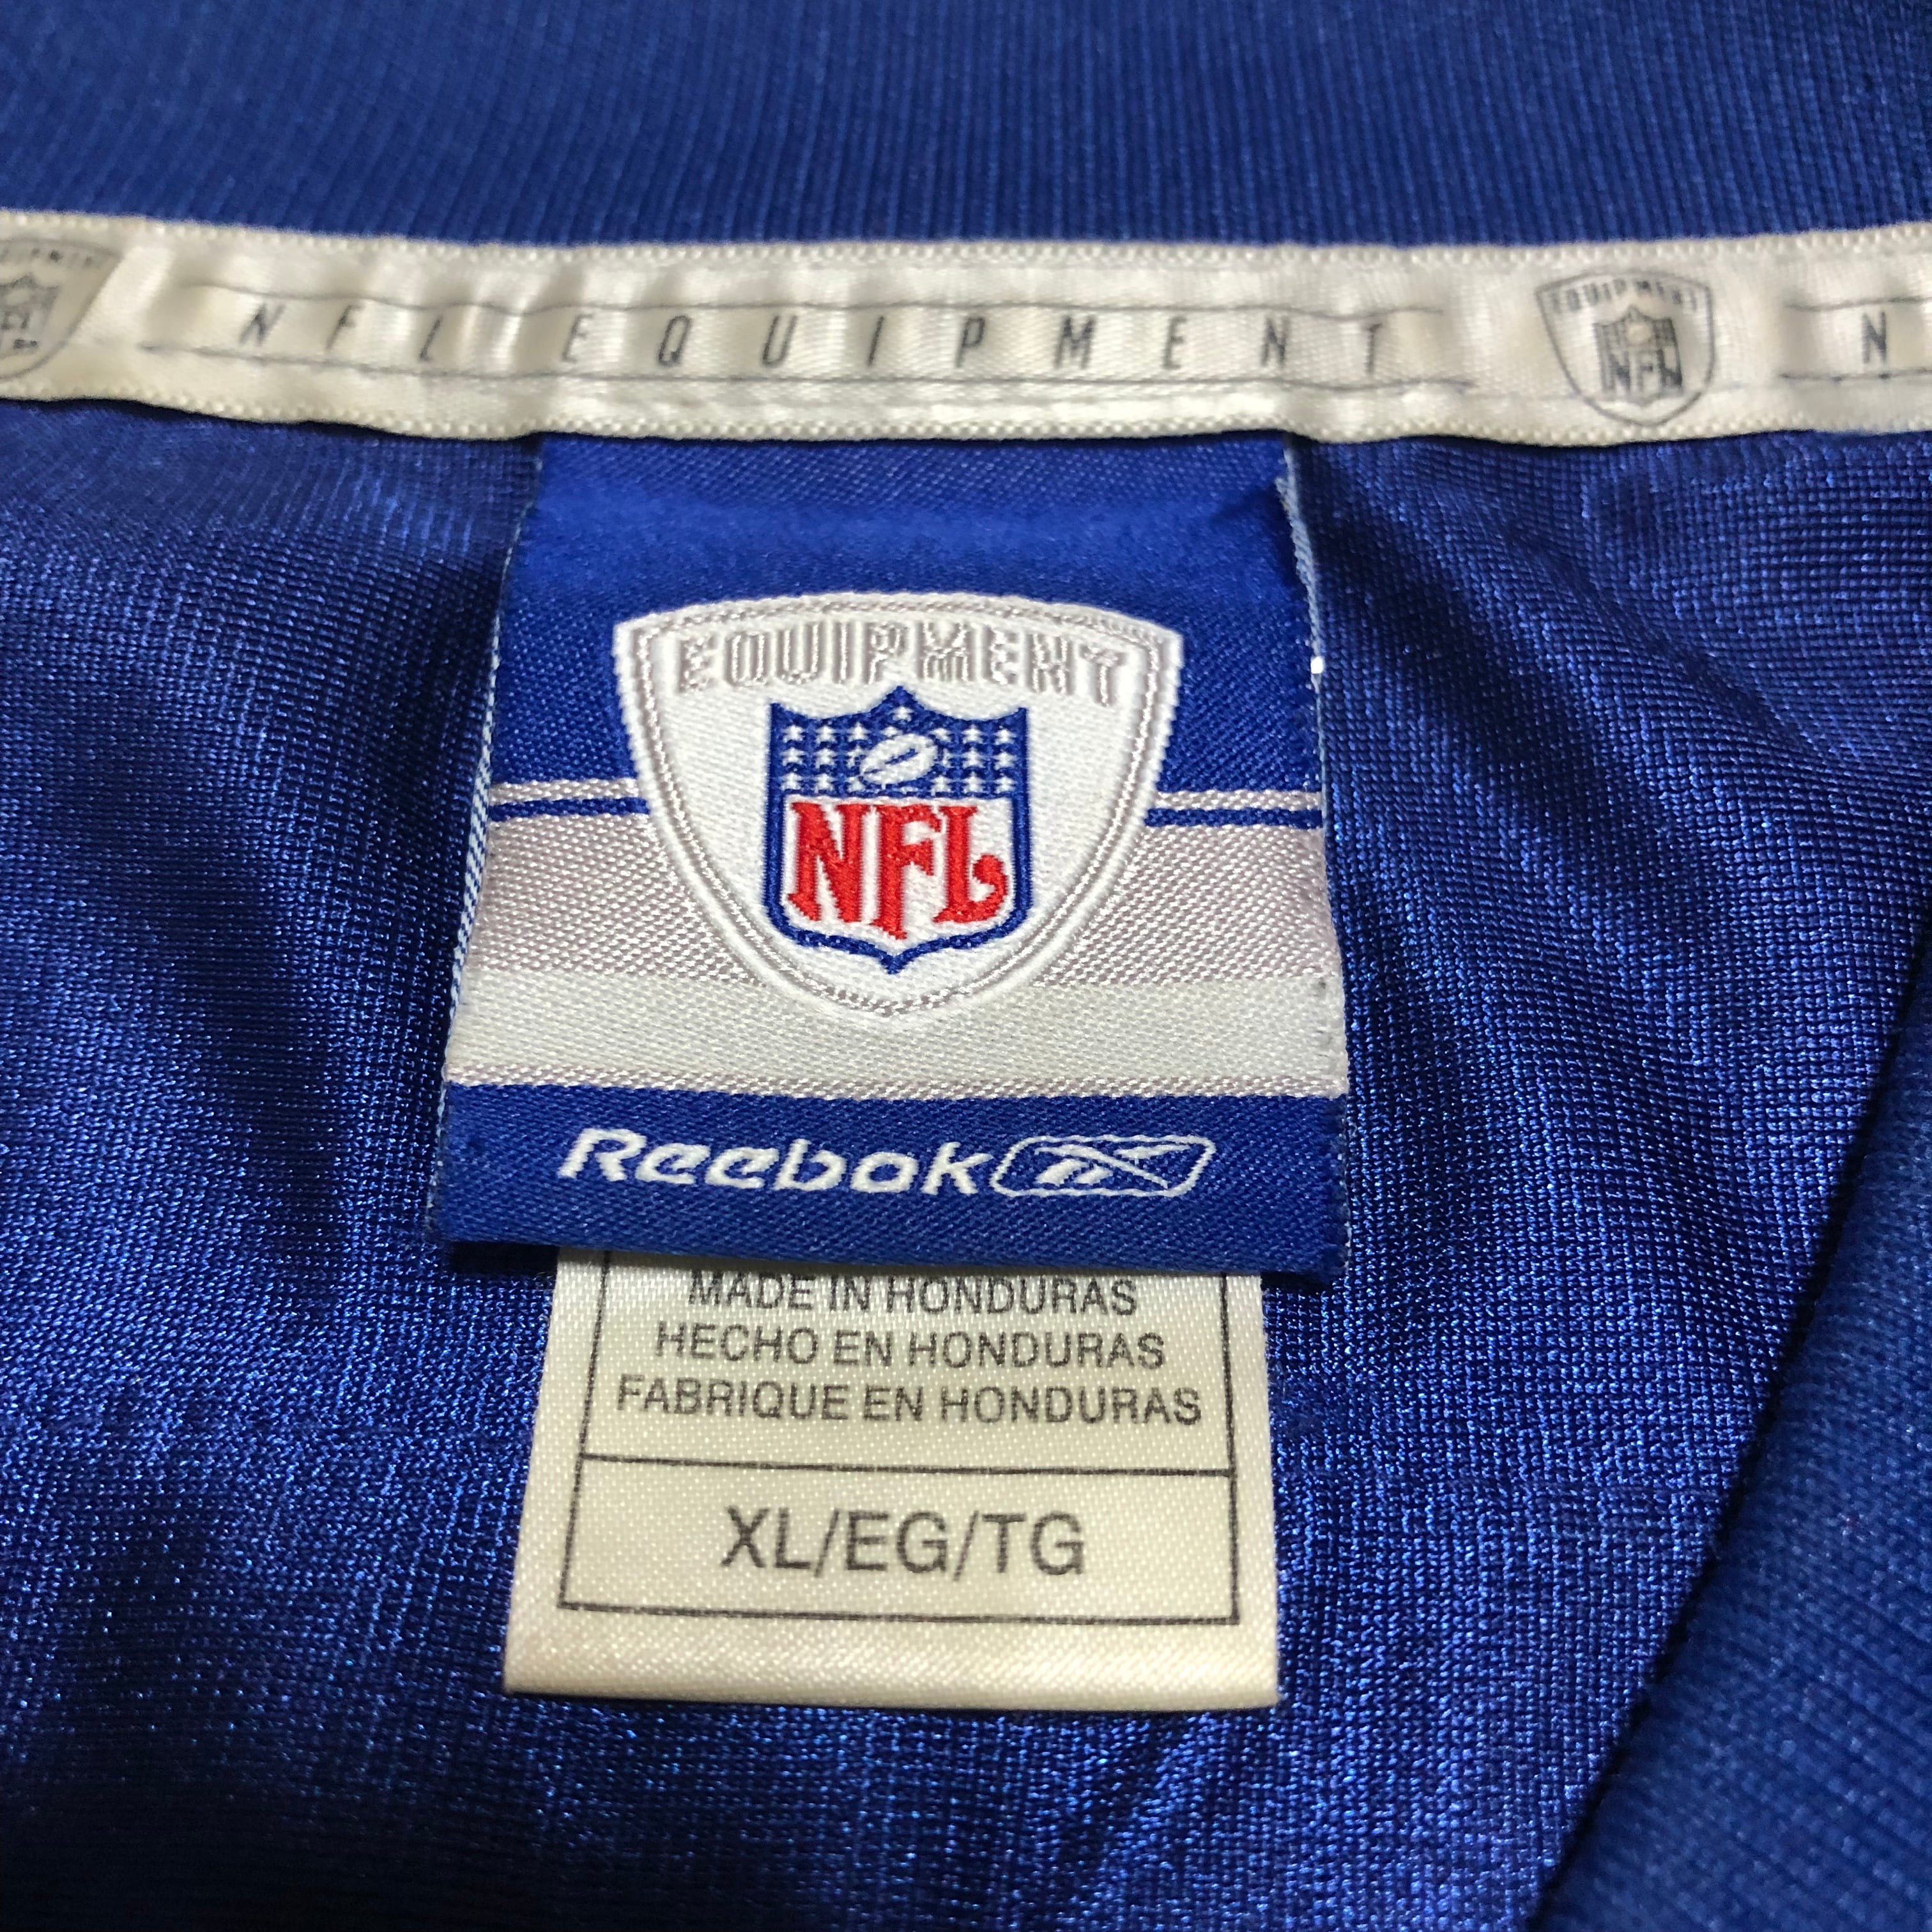 size XL】NFL GIANTS ジャイアンツ ユニフォーム Tシャツ ストリート